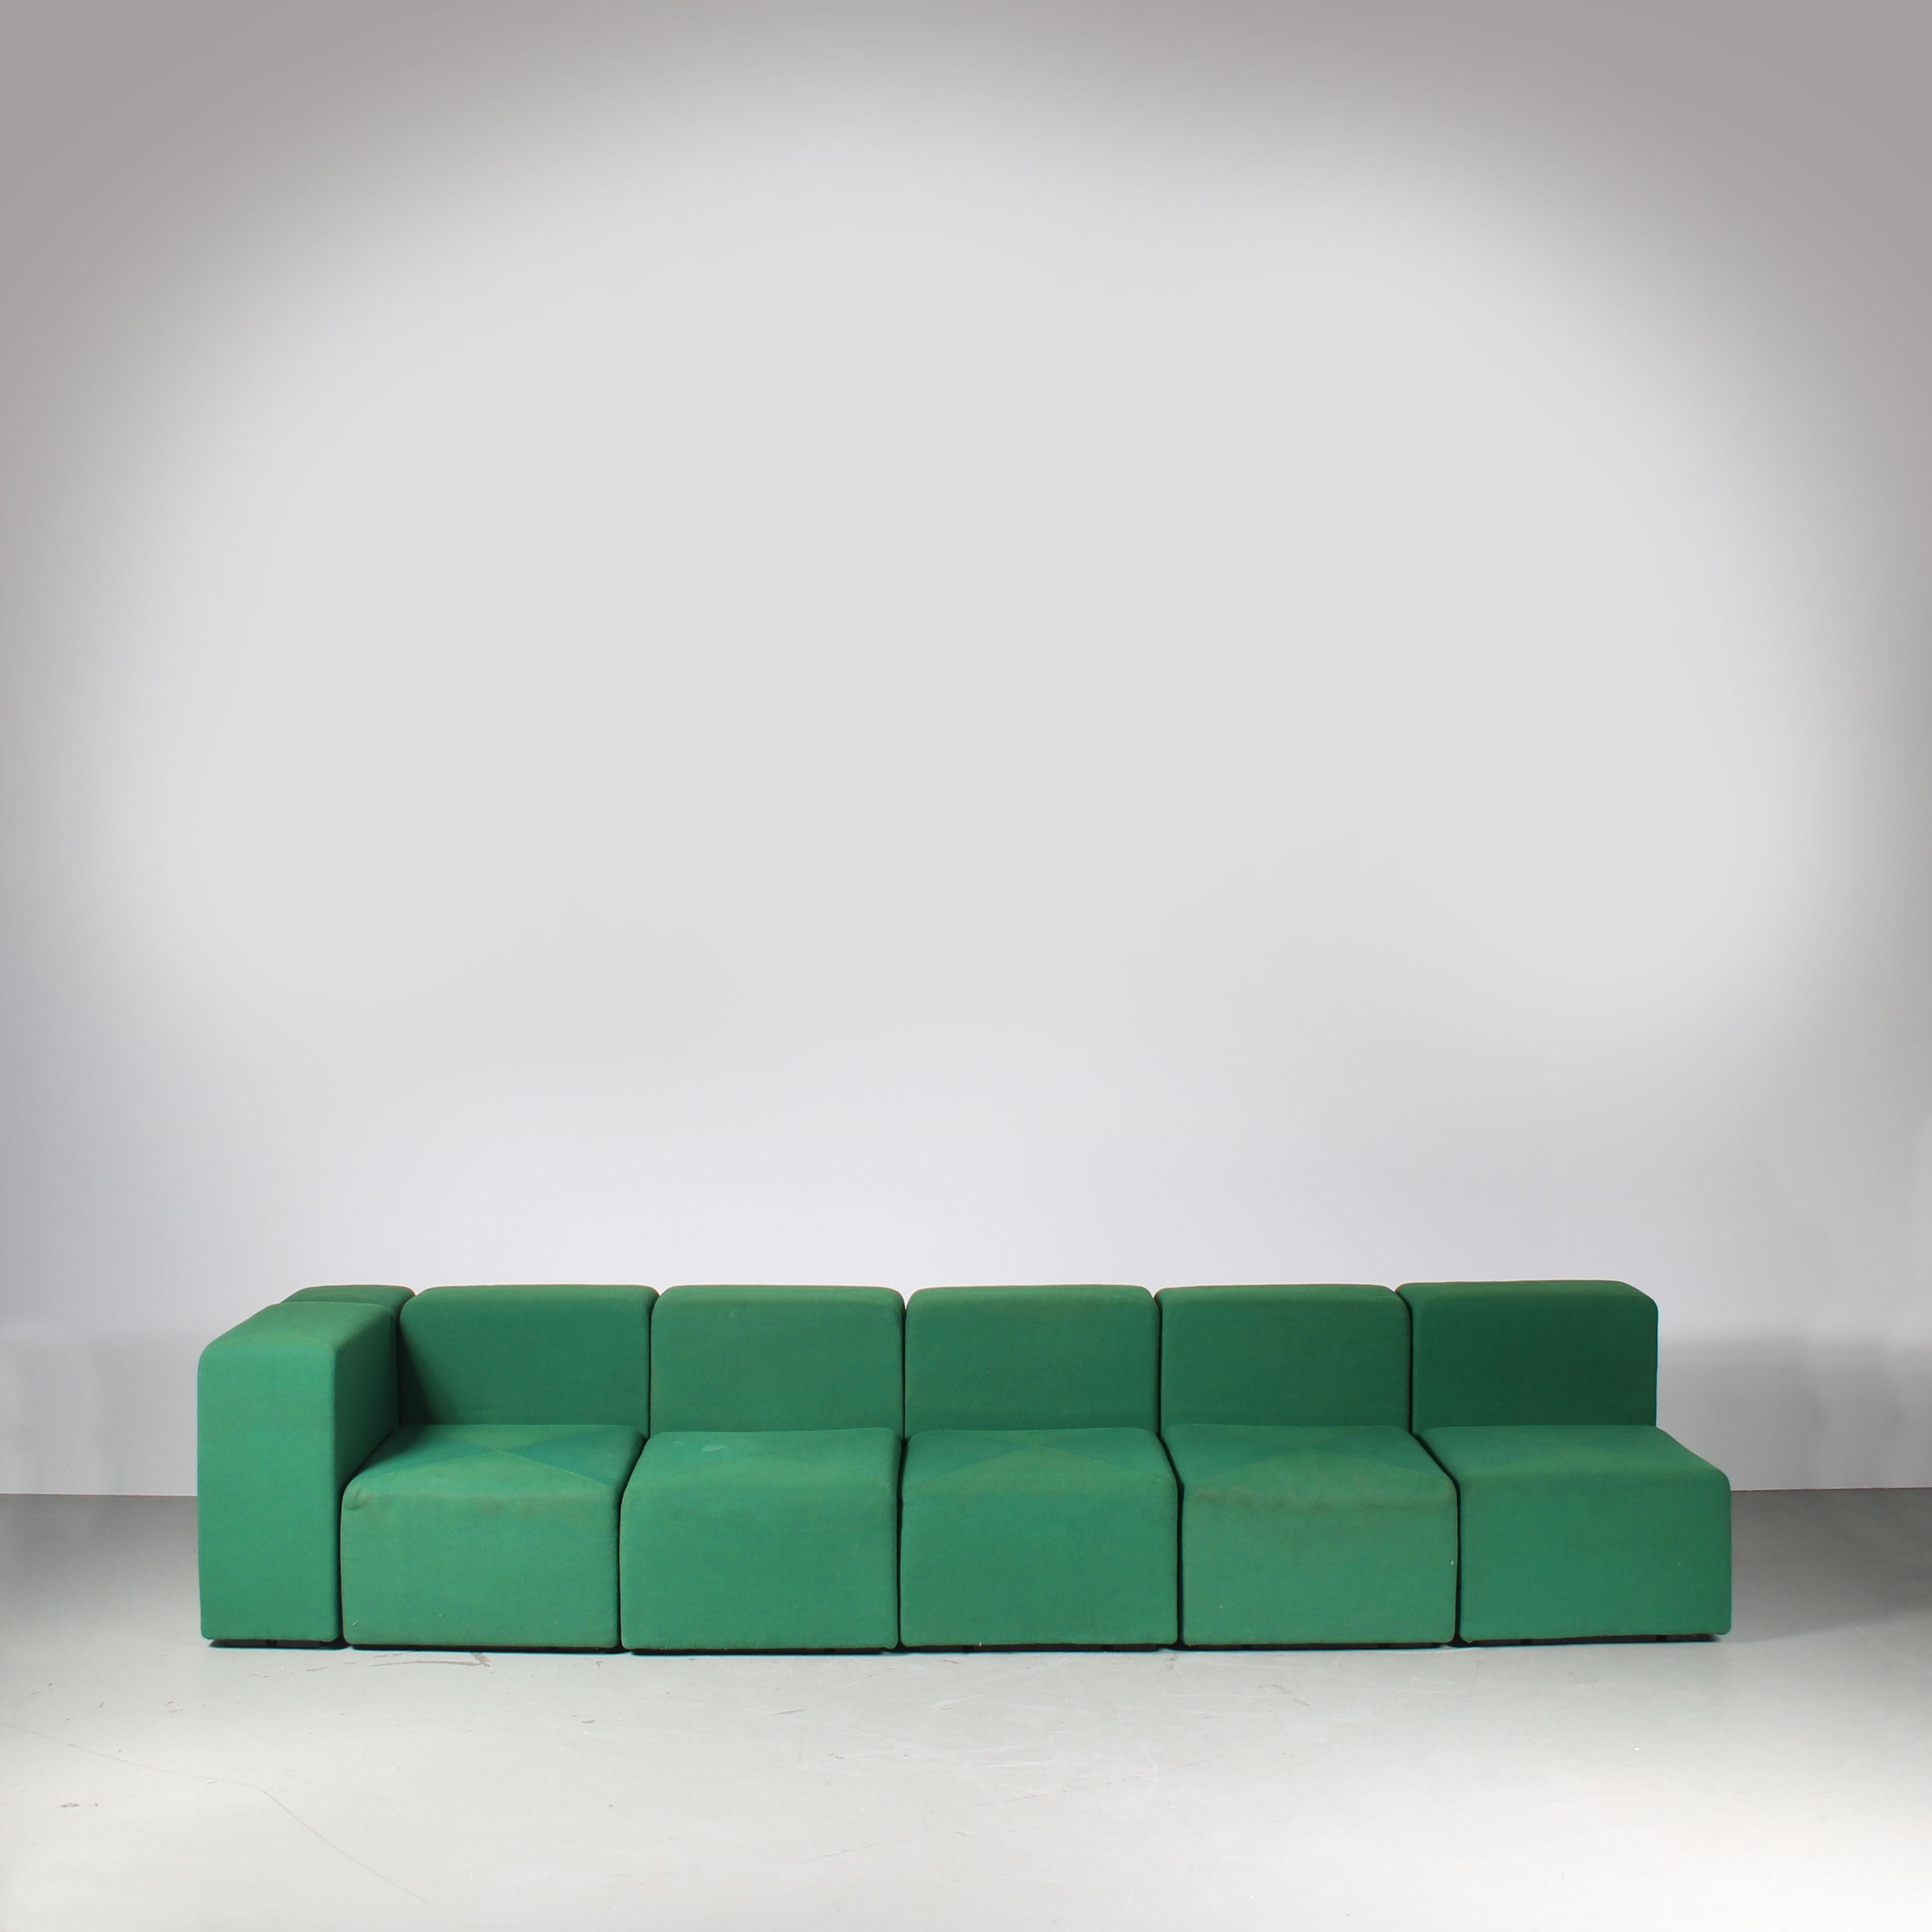 Modular “Systema 61” Sofa by Giancarlo Piretti for Anonima Castelli, Italy 2